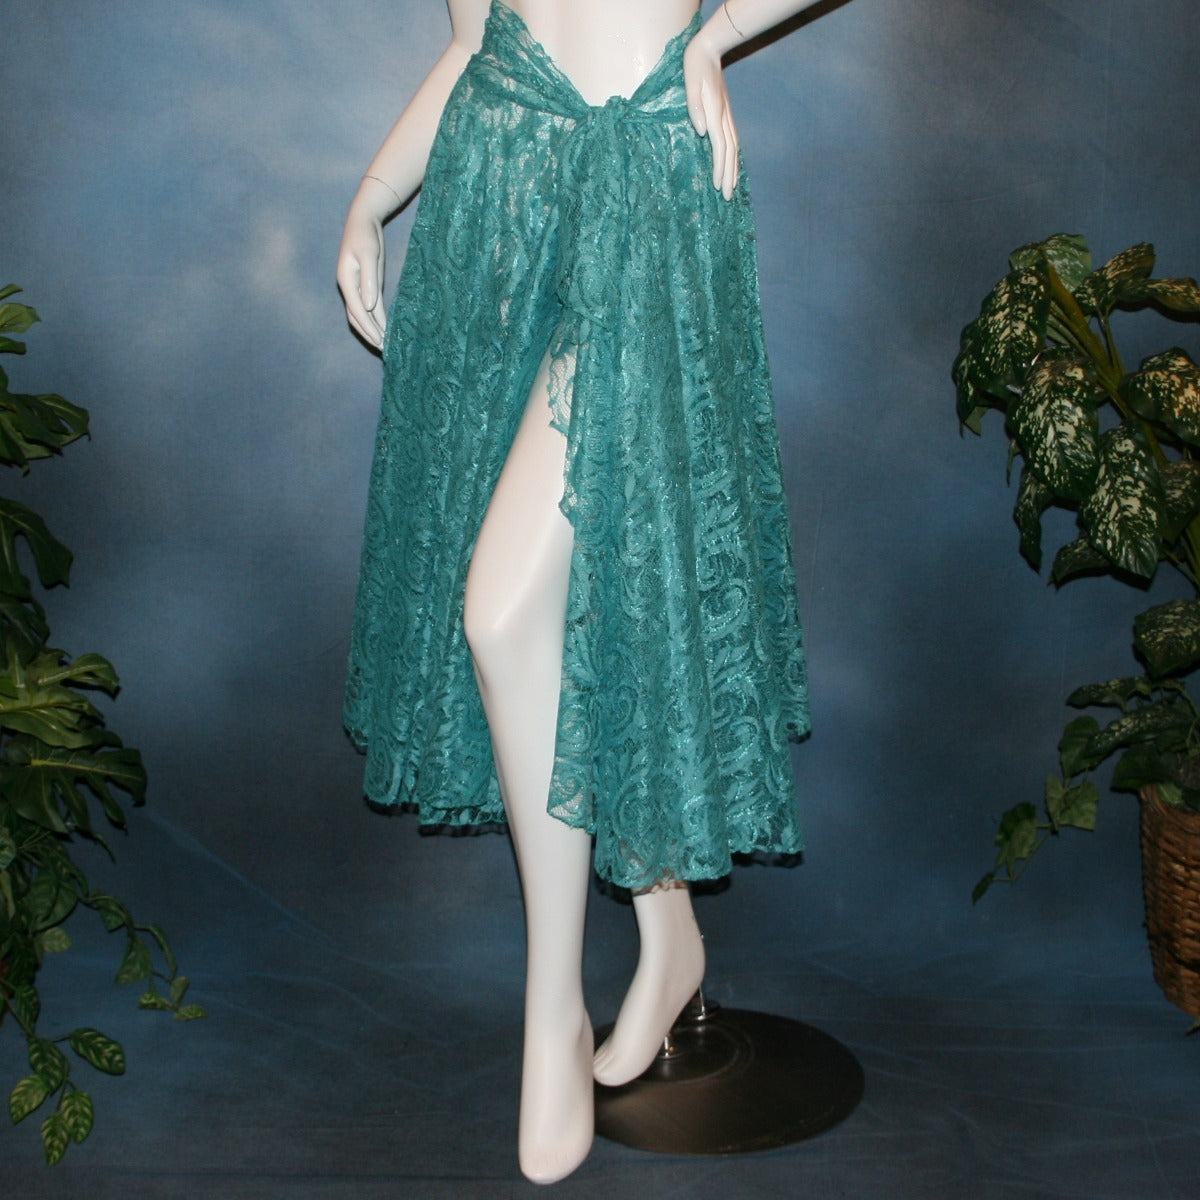 Aqua lace ballroom skirt, wrap style, was created with yards of aqua lace, many panels shaped like large petals.